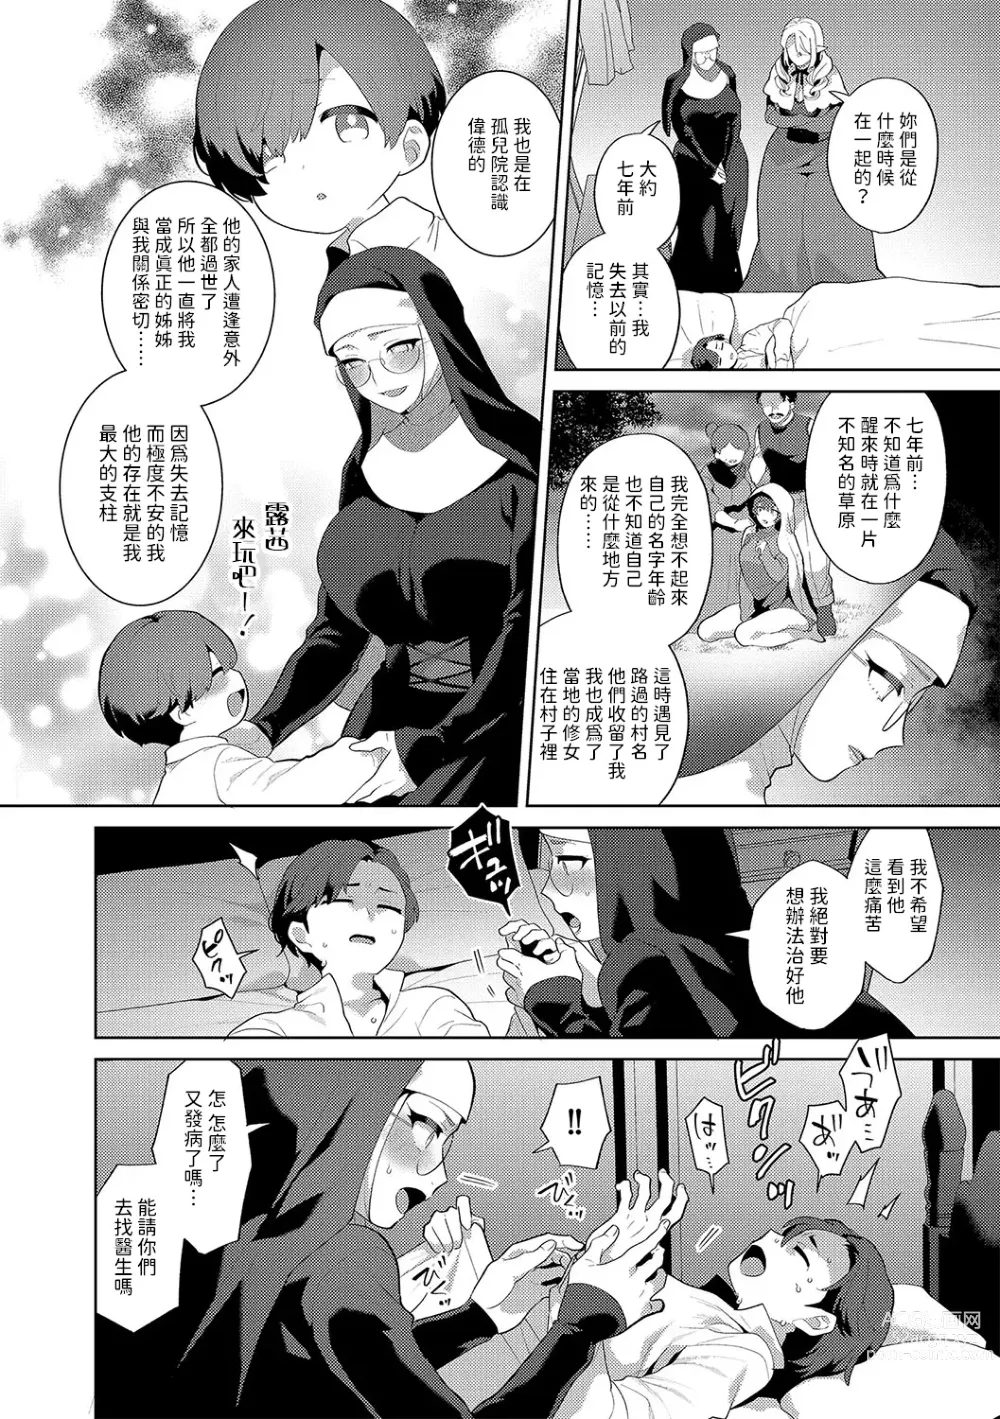 Page 6 of manga Reventlow-jou no Joukou Jikenbo Ch. 5